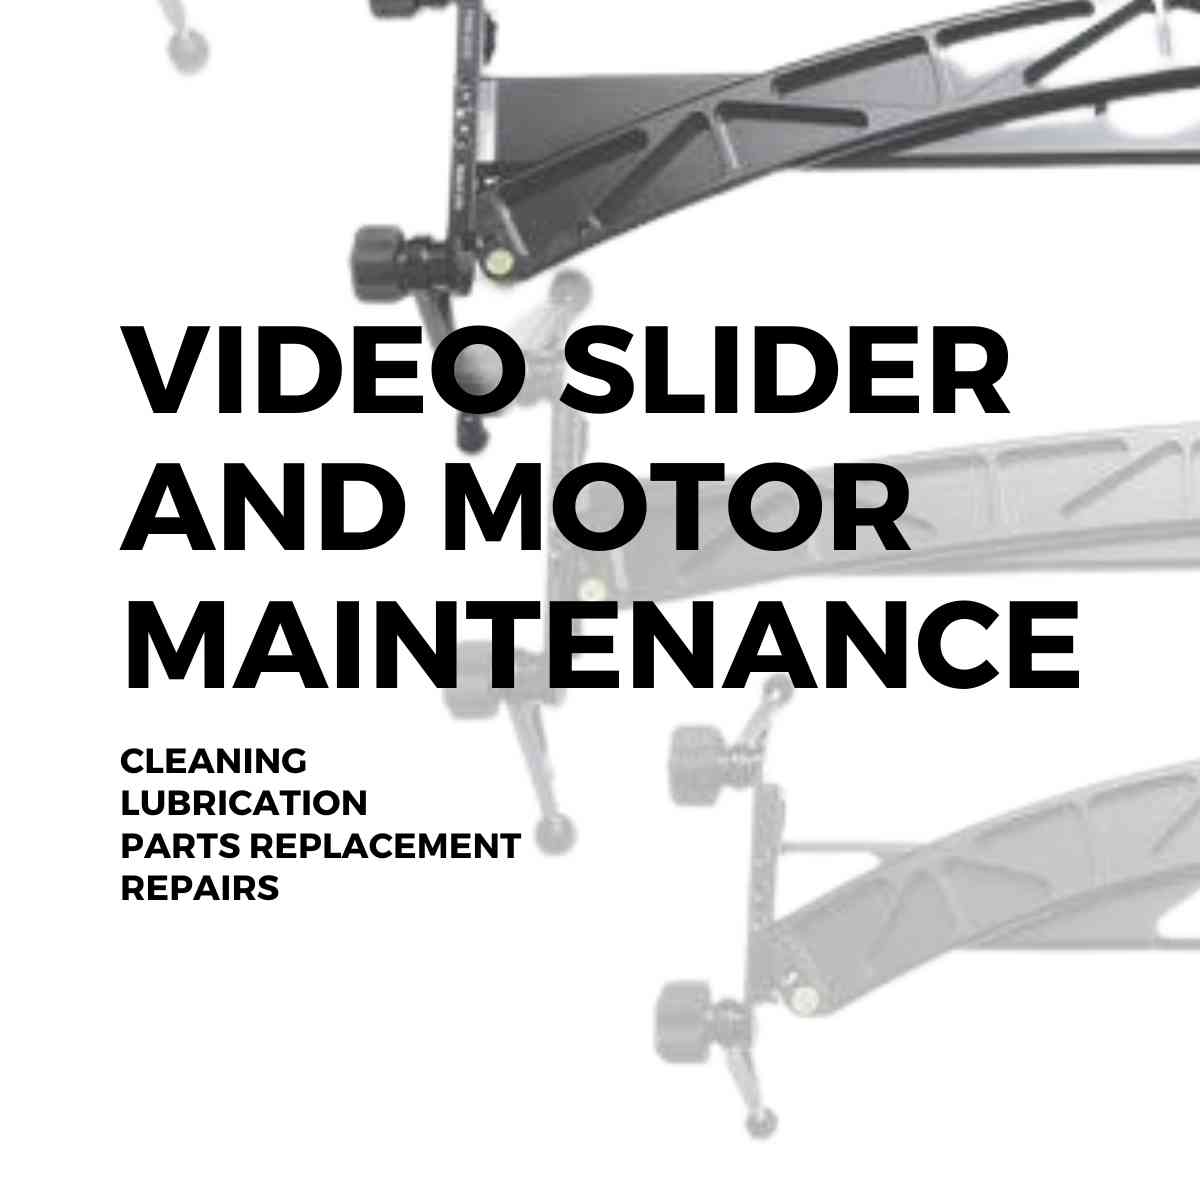 ProMediaGear Video Slider and Motor Maintenance